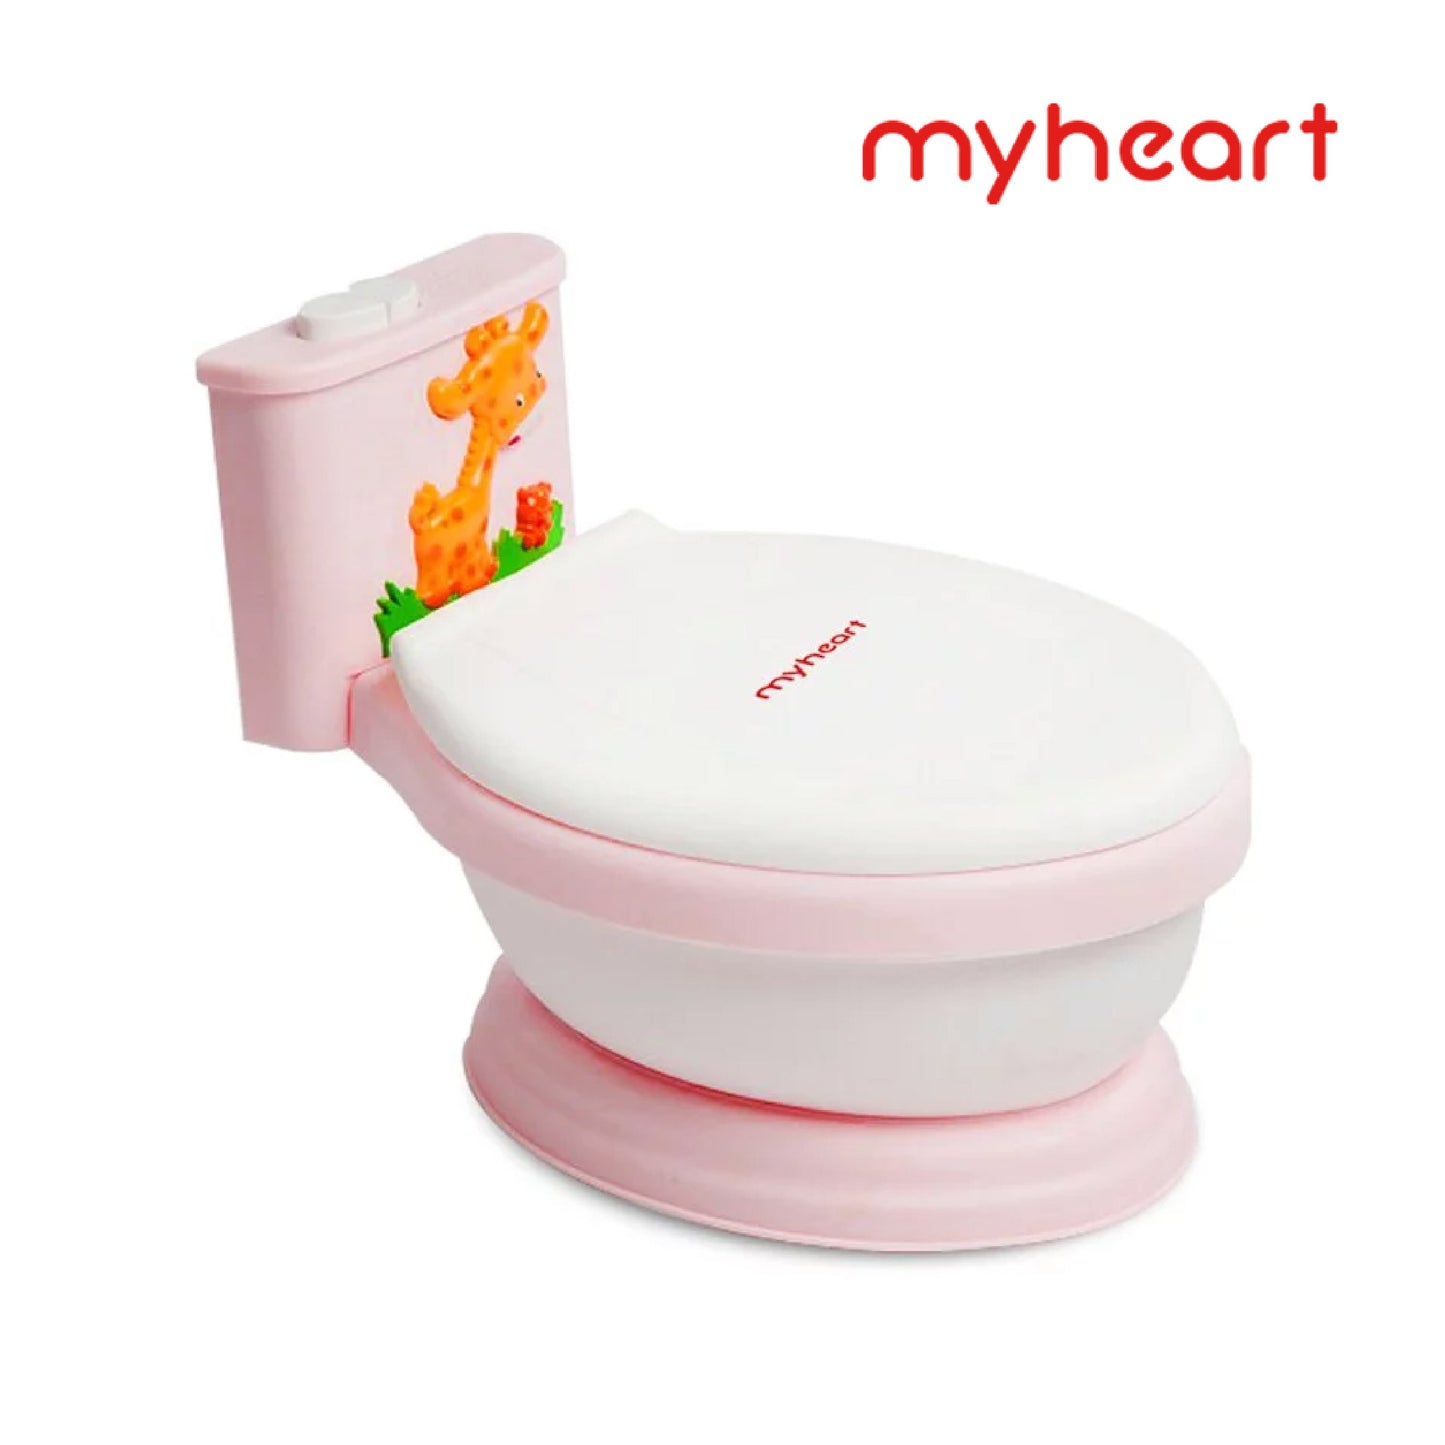 myheart music toilet-princess pink